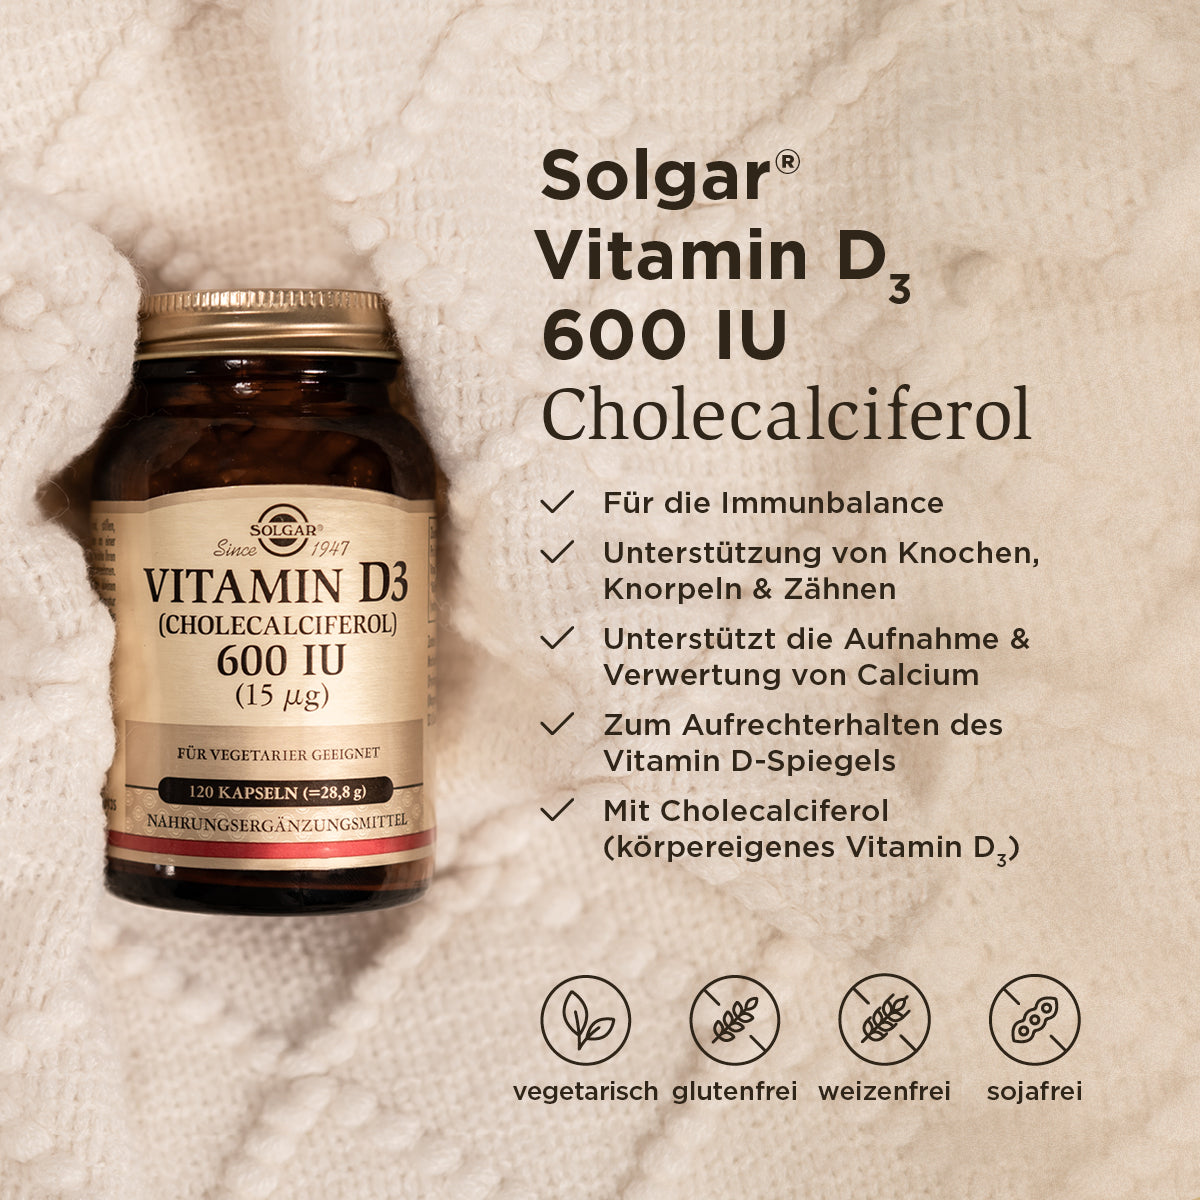 Grafik der Benefits der Solgar Vitamin D3 Kapseln